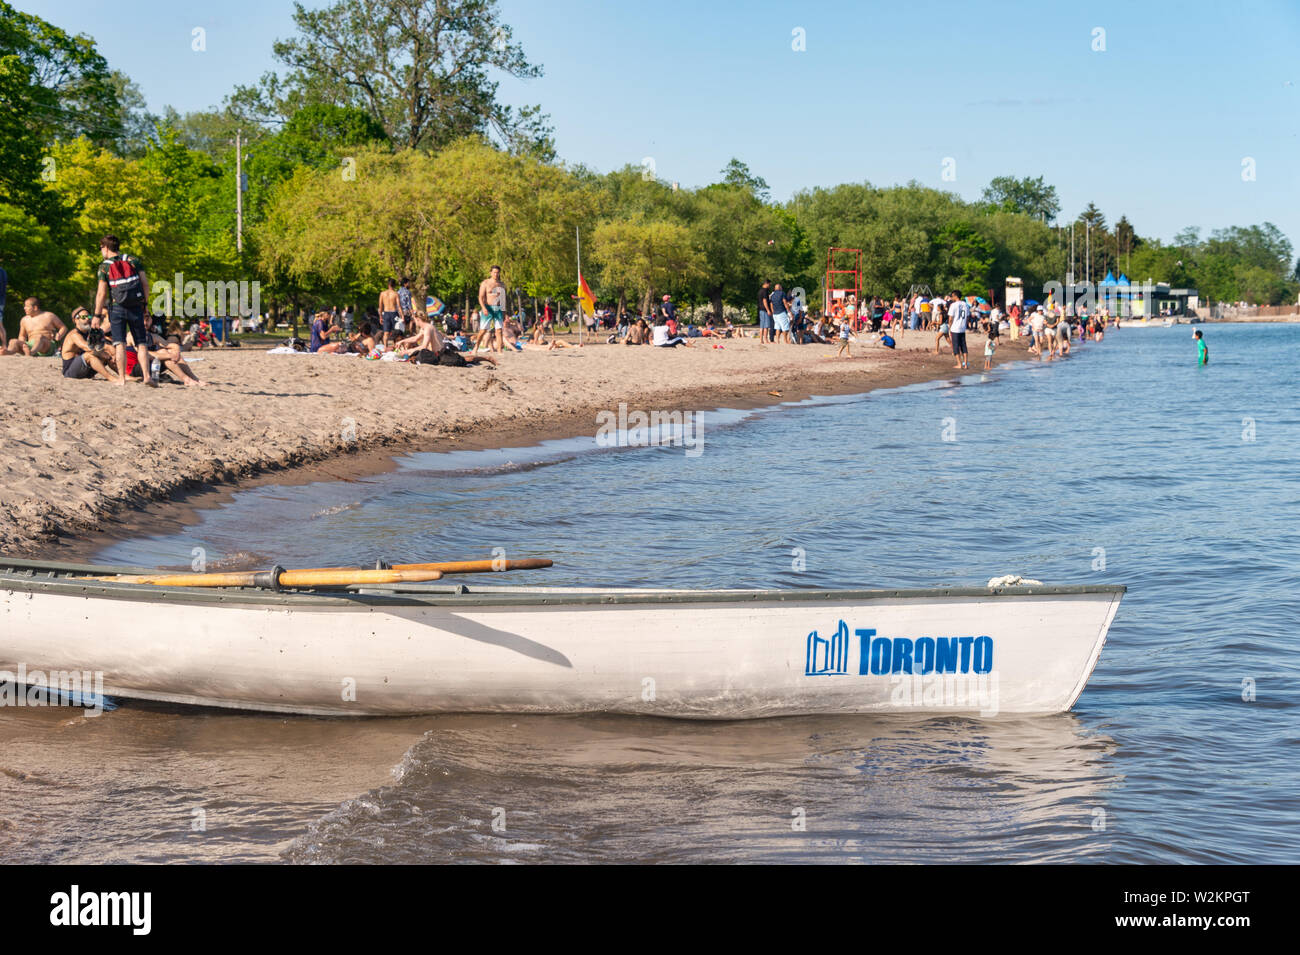 Toronto, CA - 23 June 2019: Small boat with Toronto city logo mooring at the Centre island beach. Stock Photo